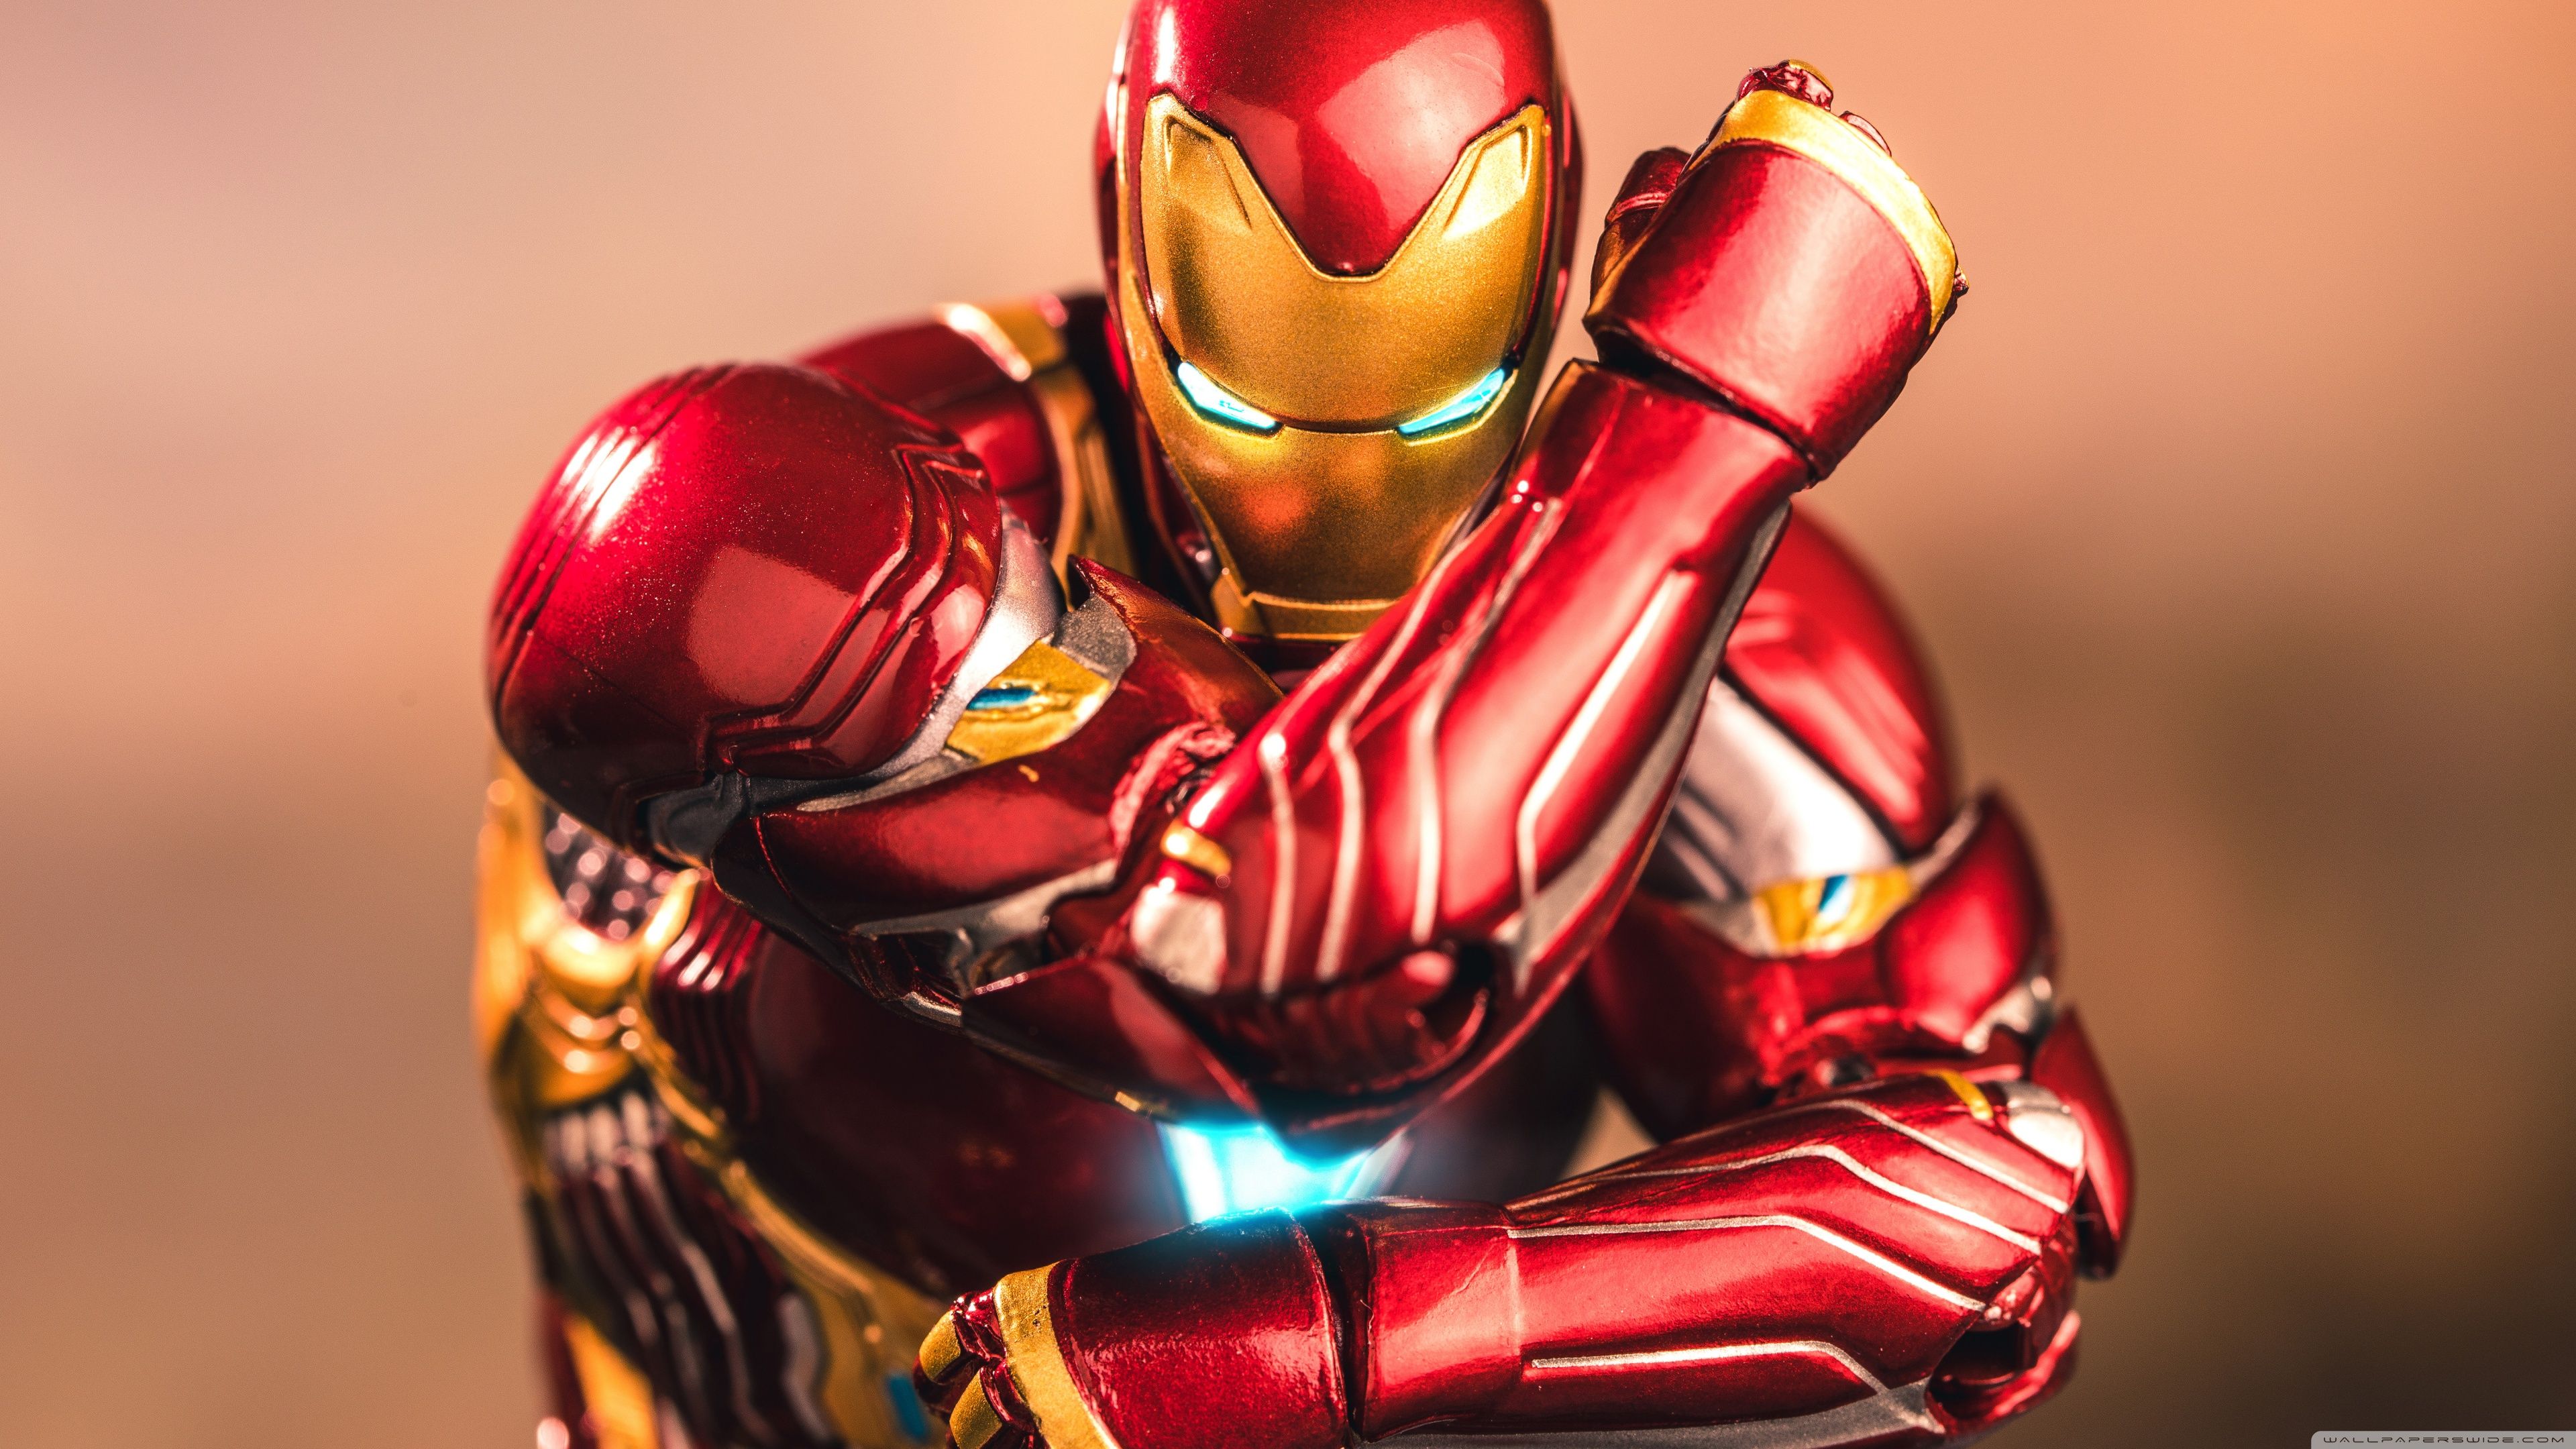 Iron Man statue Ultra HD Desktop Background Wallpaper for 4K UHD TV, Widescreen & UltraWide Desktop & Laptop, Tablet